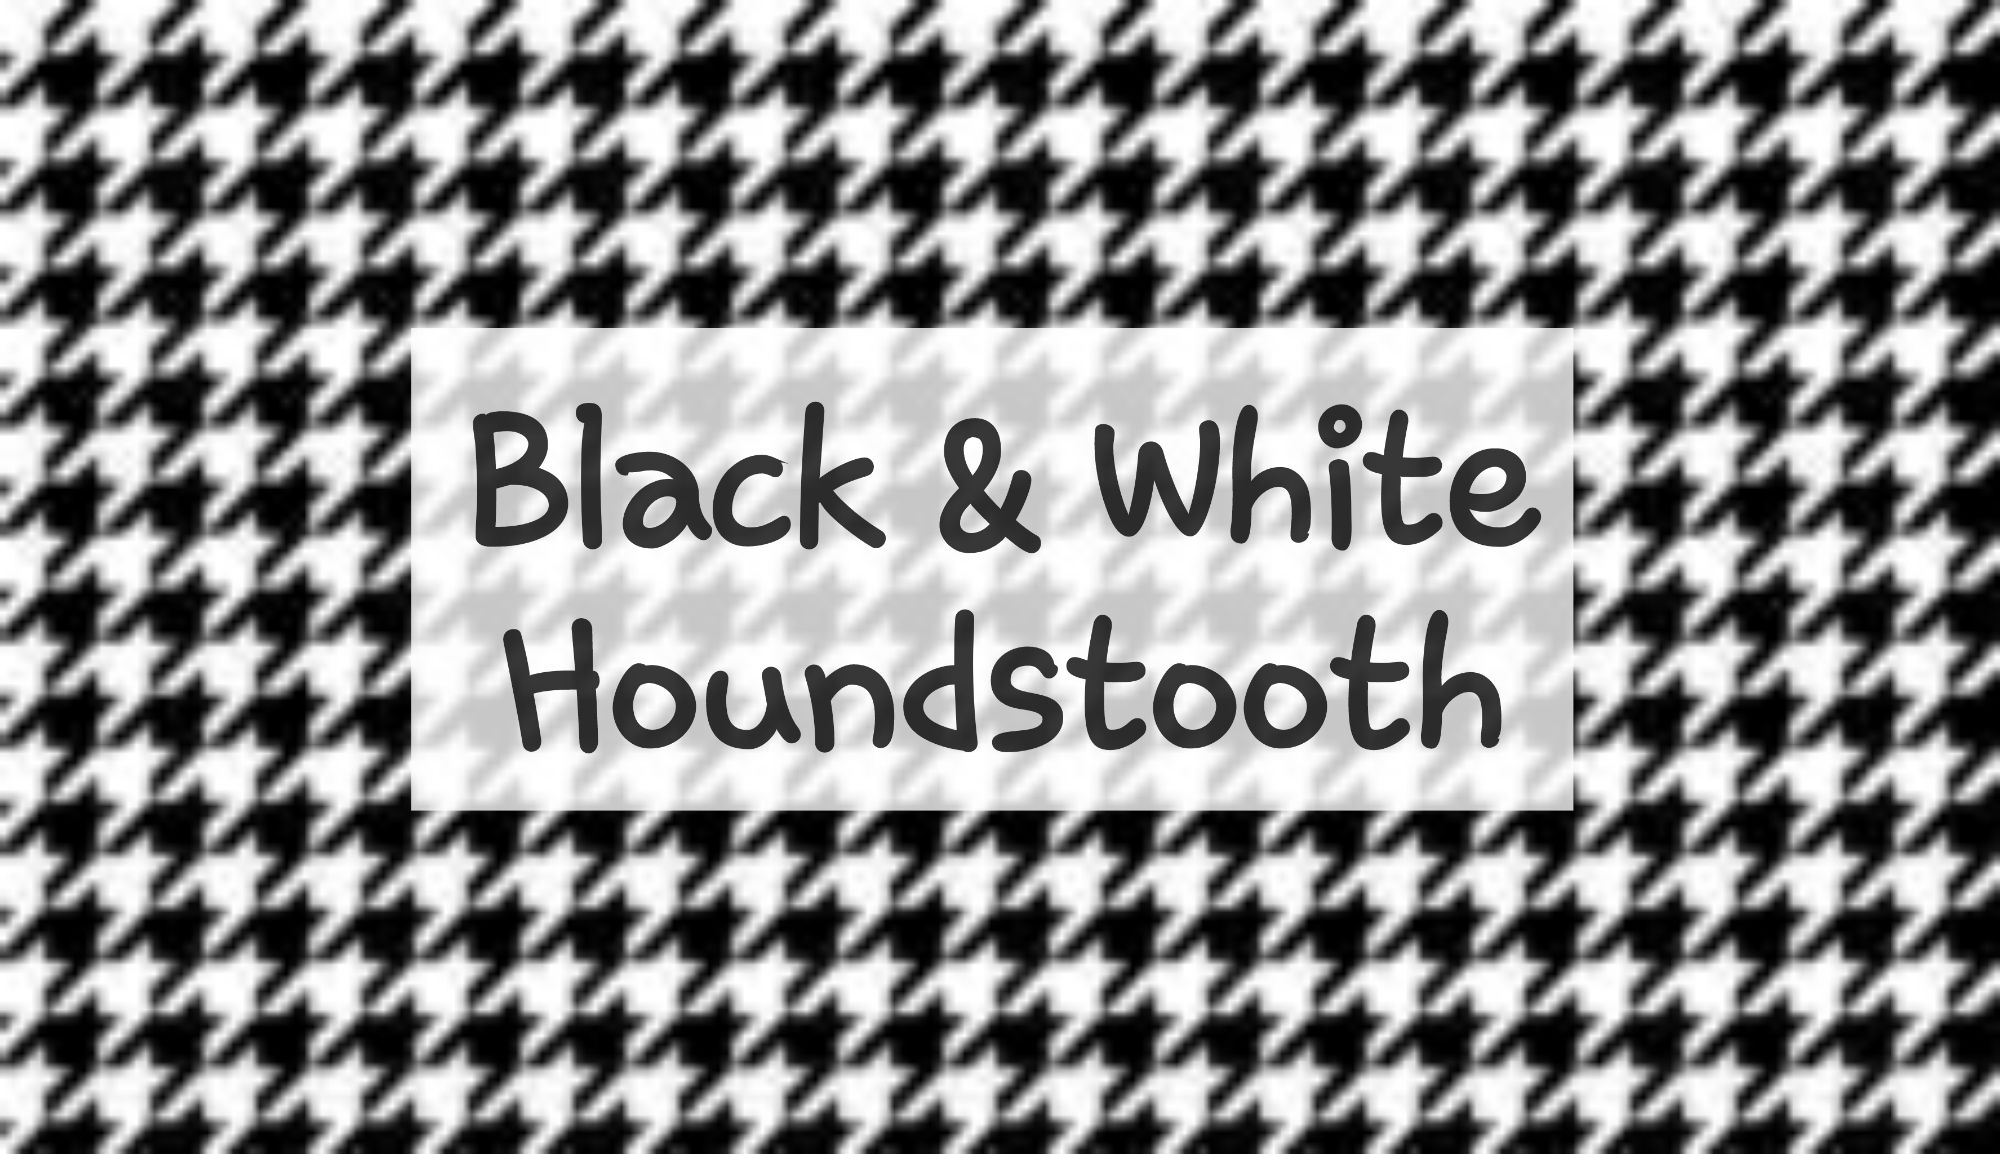 Black & White Houndstooth 